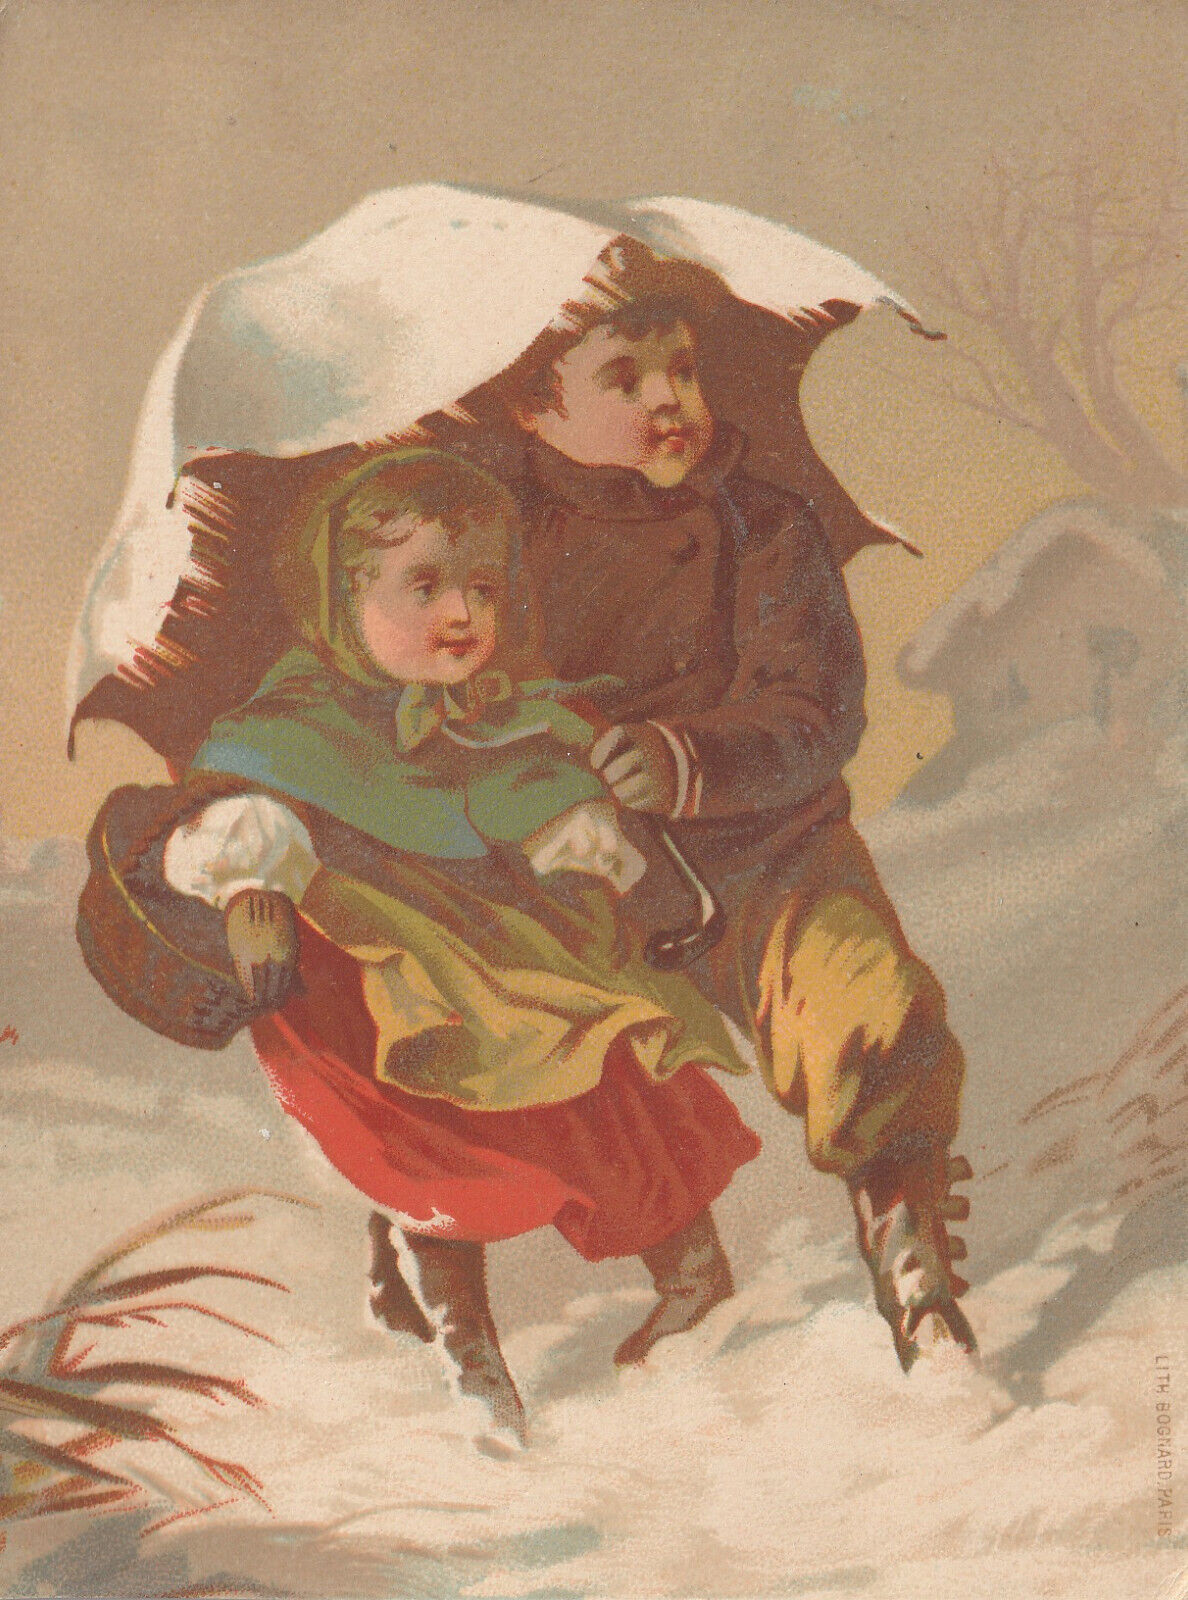 Victorian Stock Trade Card Children Under Umbrella in Snow Storm - Bognard Paris